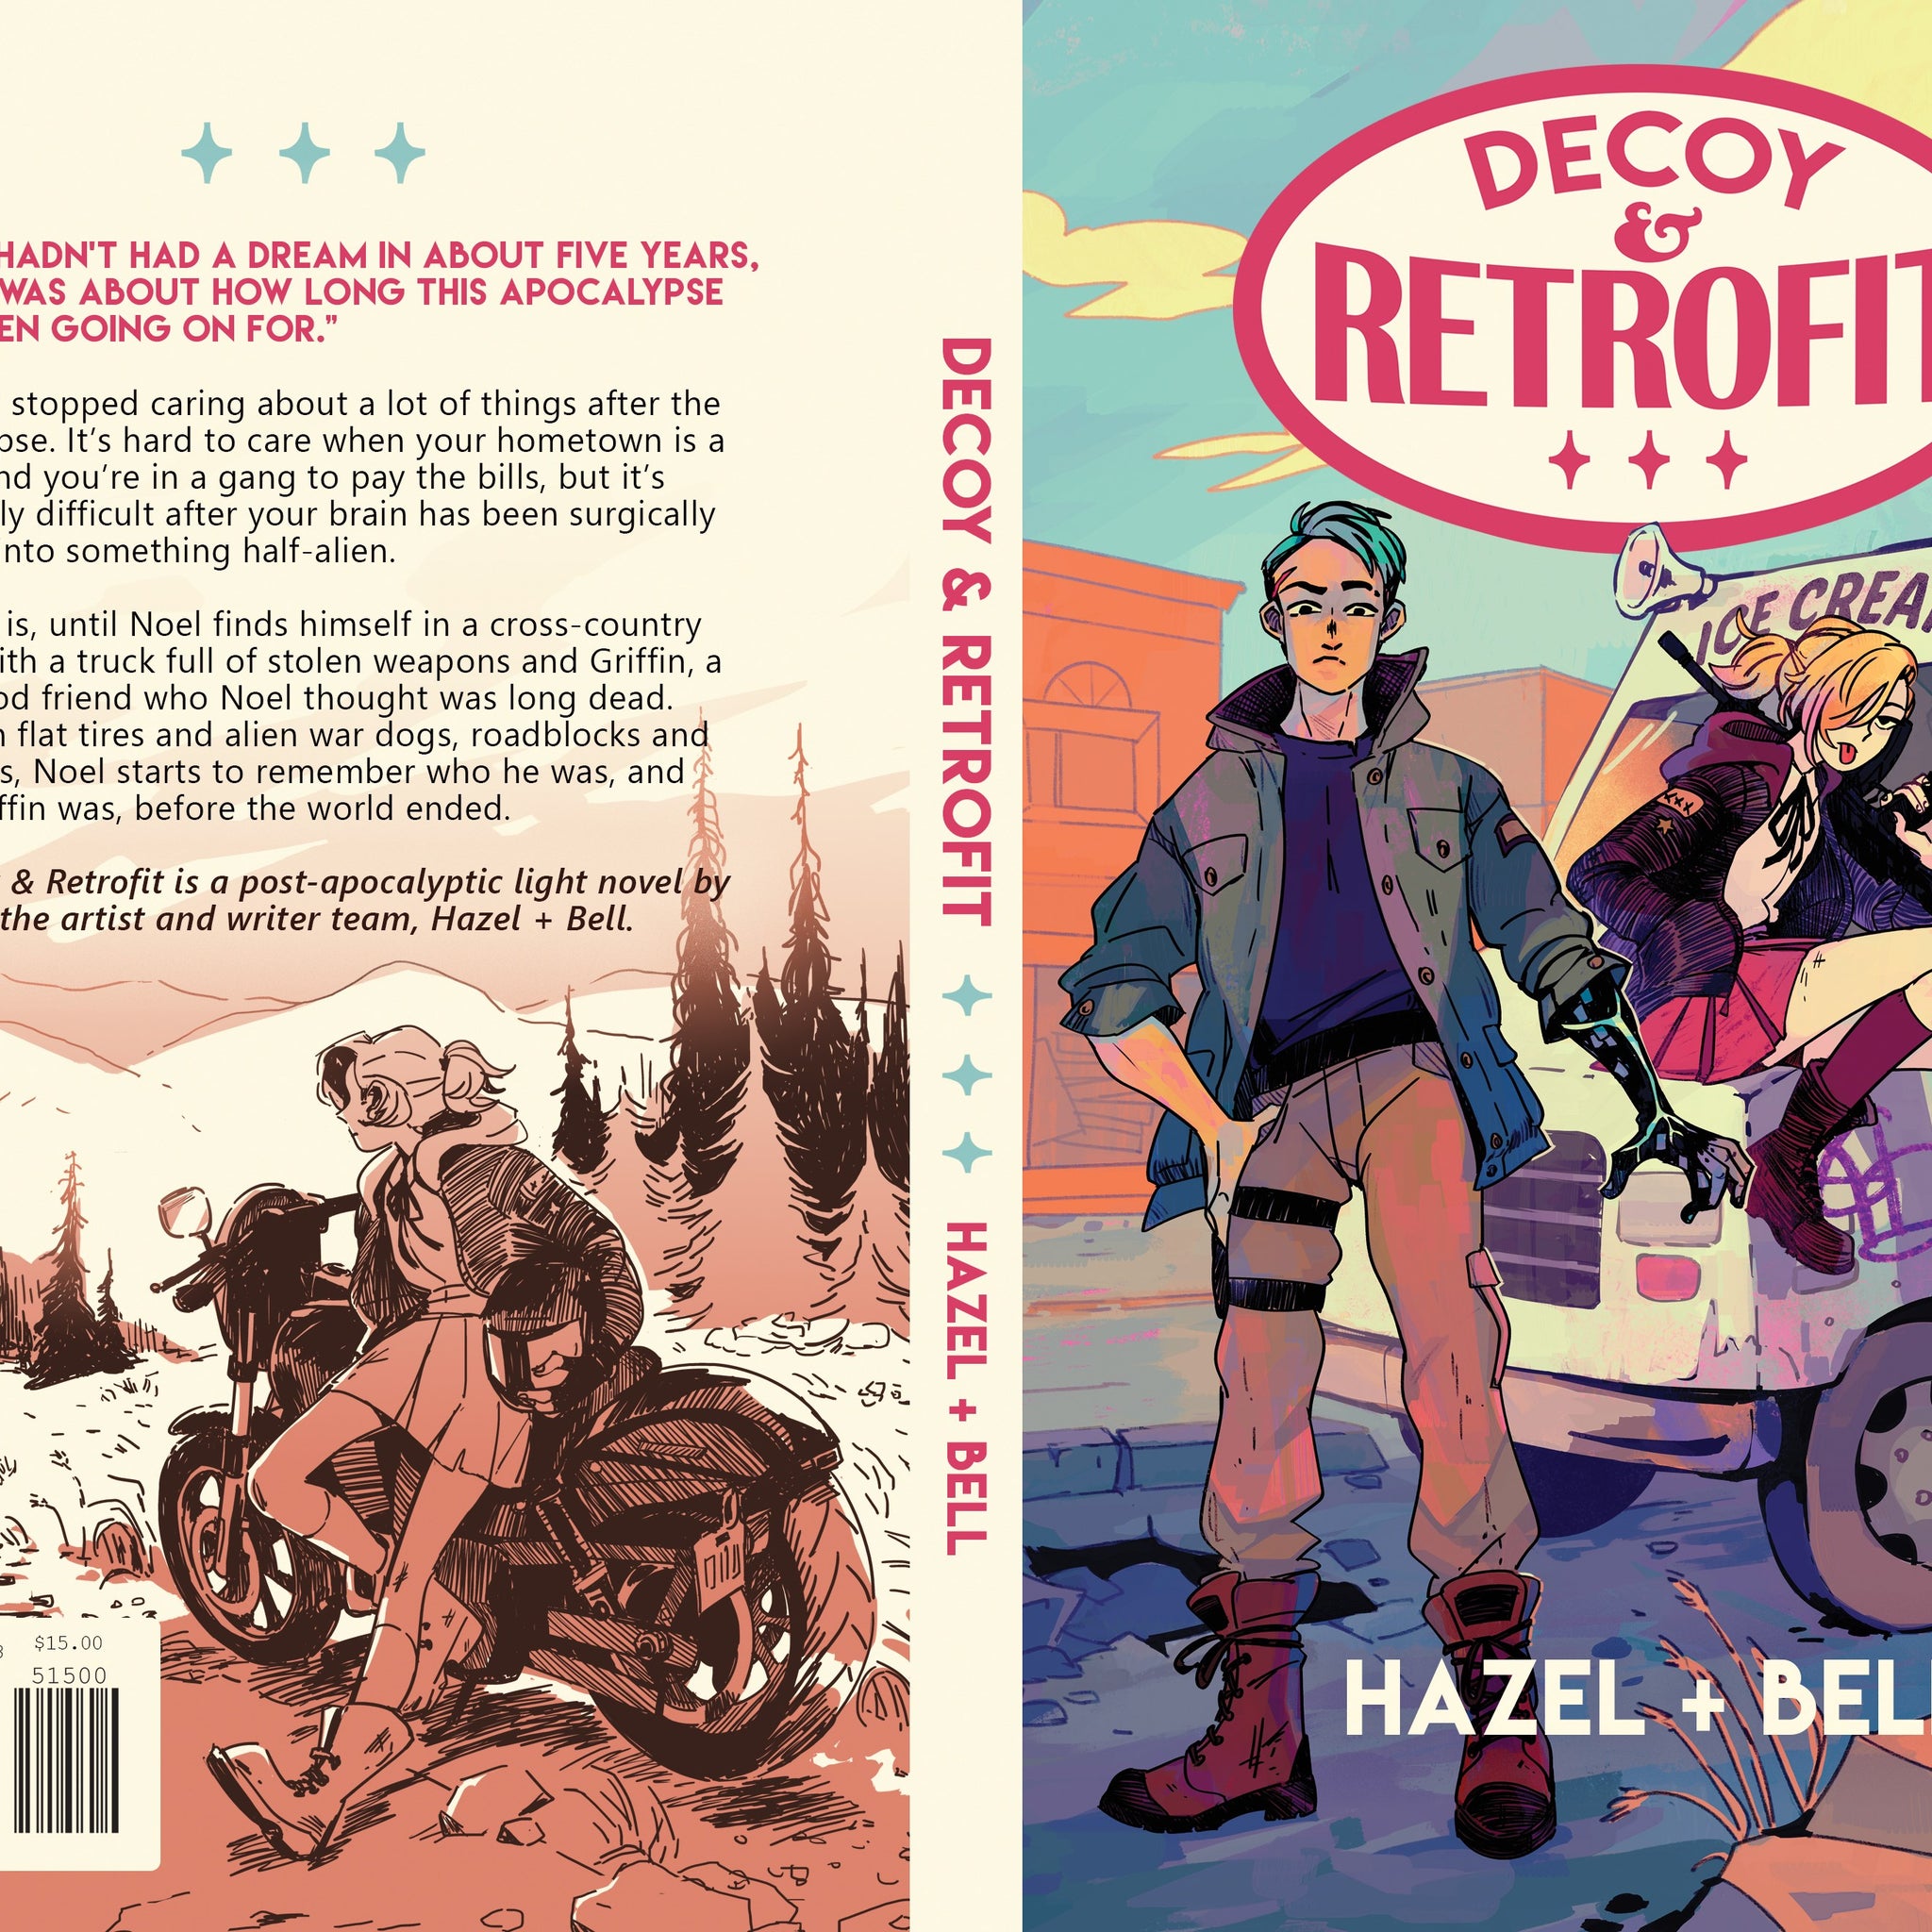 Decoy and Retrofit from Sparkler - Webcomic Merchandise 